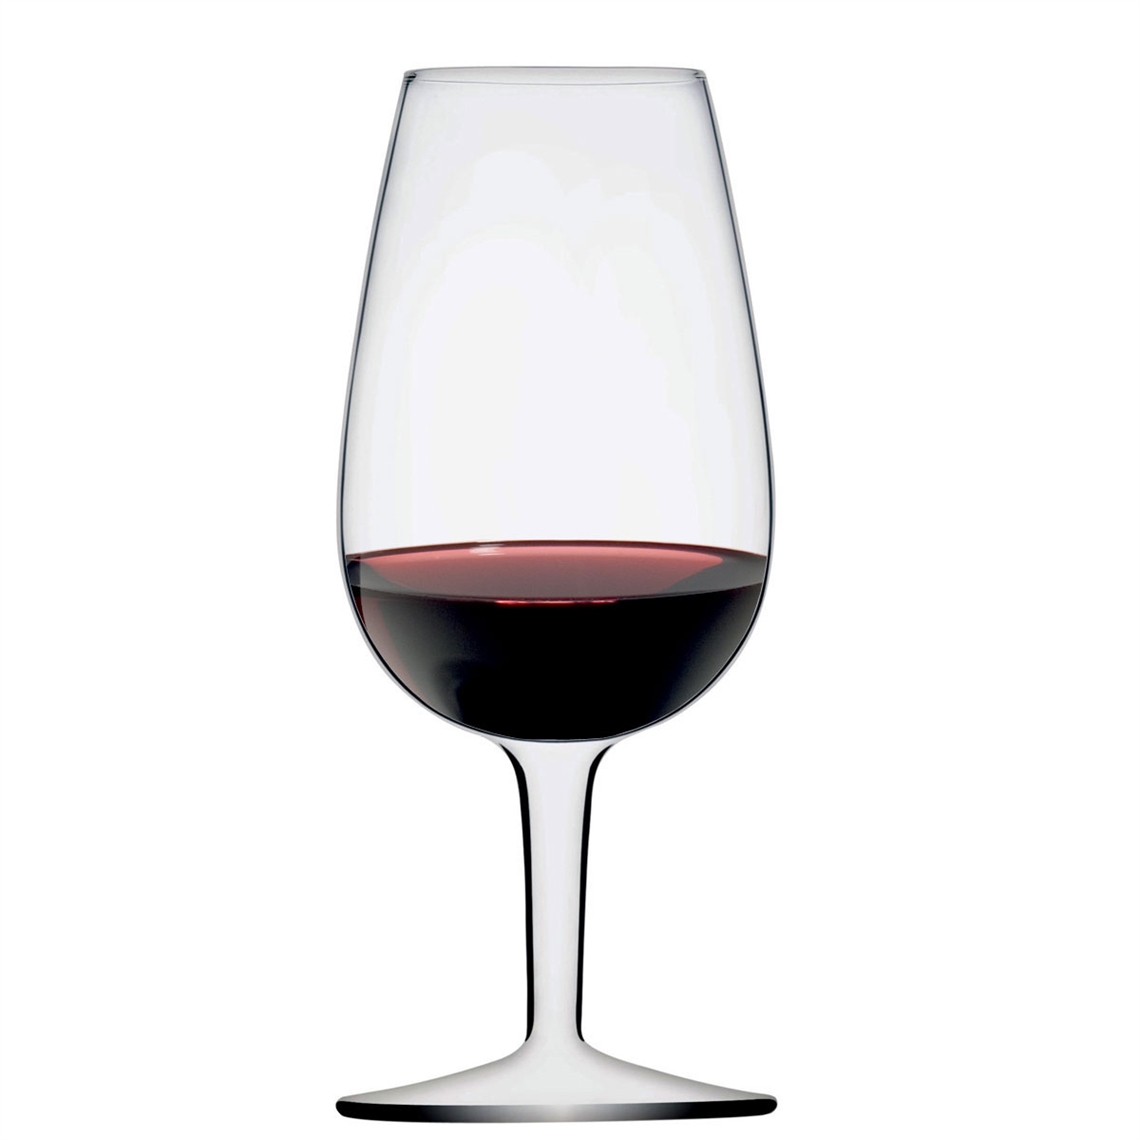 View more burgundy wine glasses from our Wine Tasting Glasses range